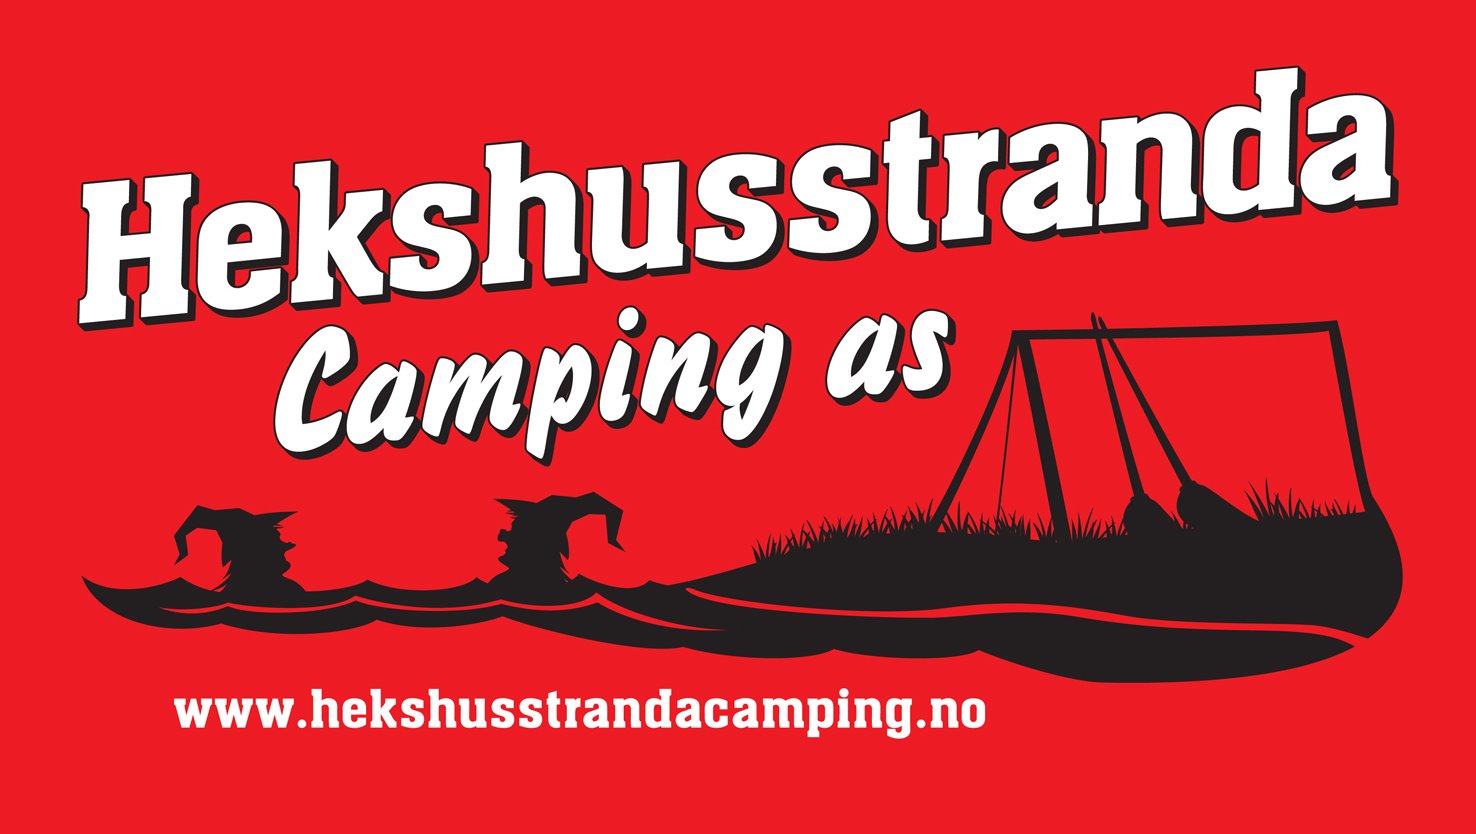 Hekshusstranda Camping